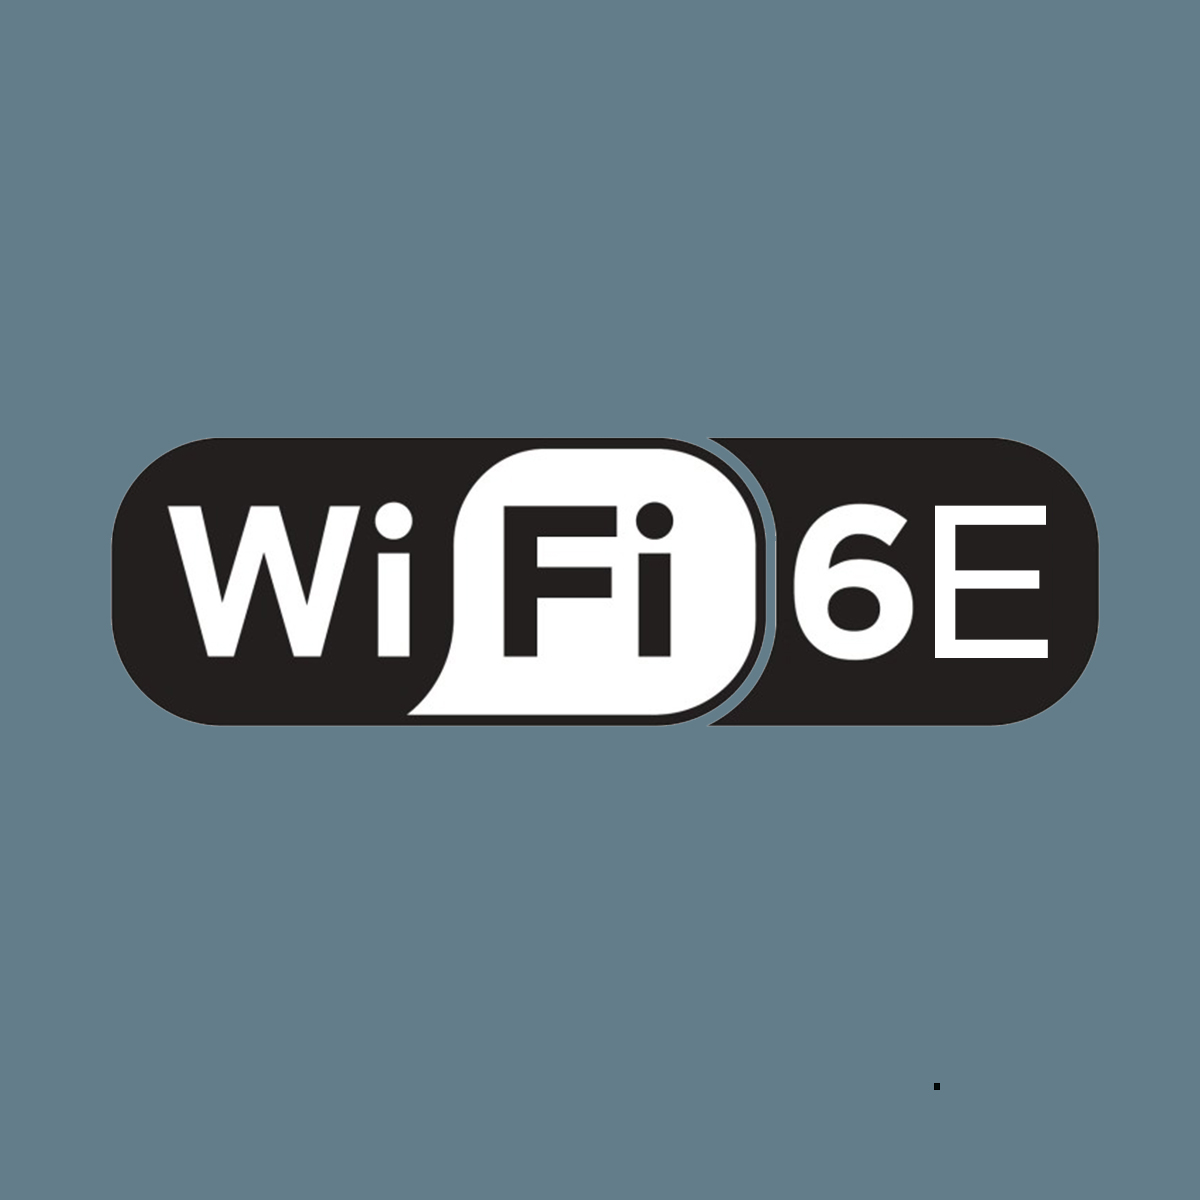 Future of WiFi - WiFi 6E